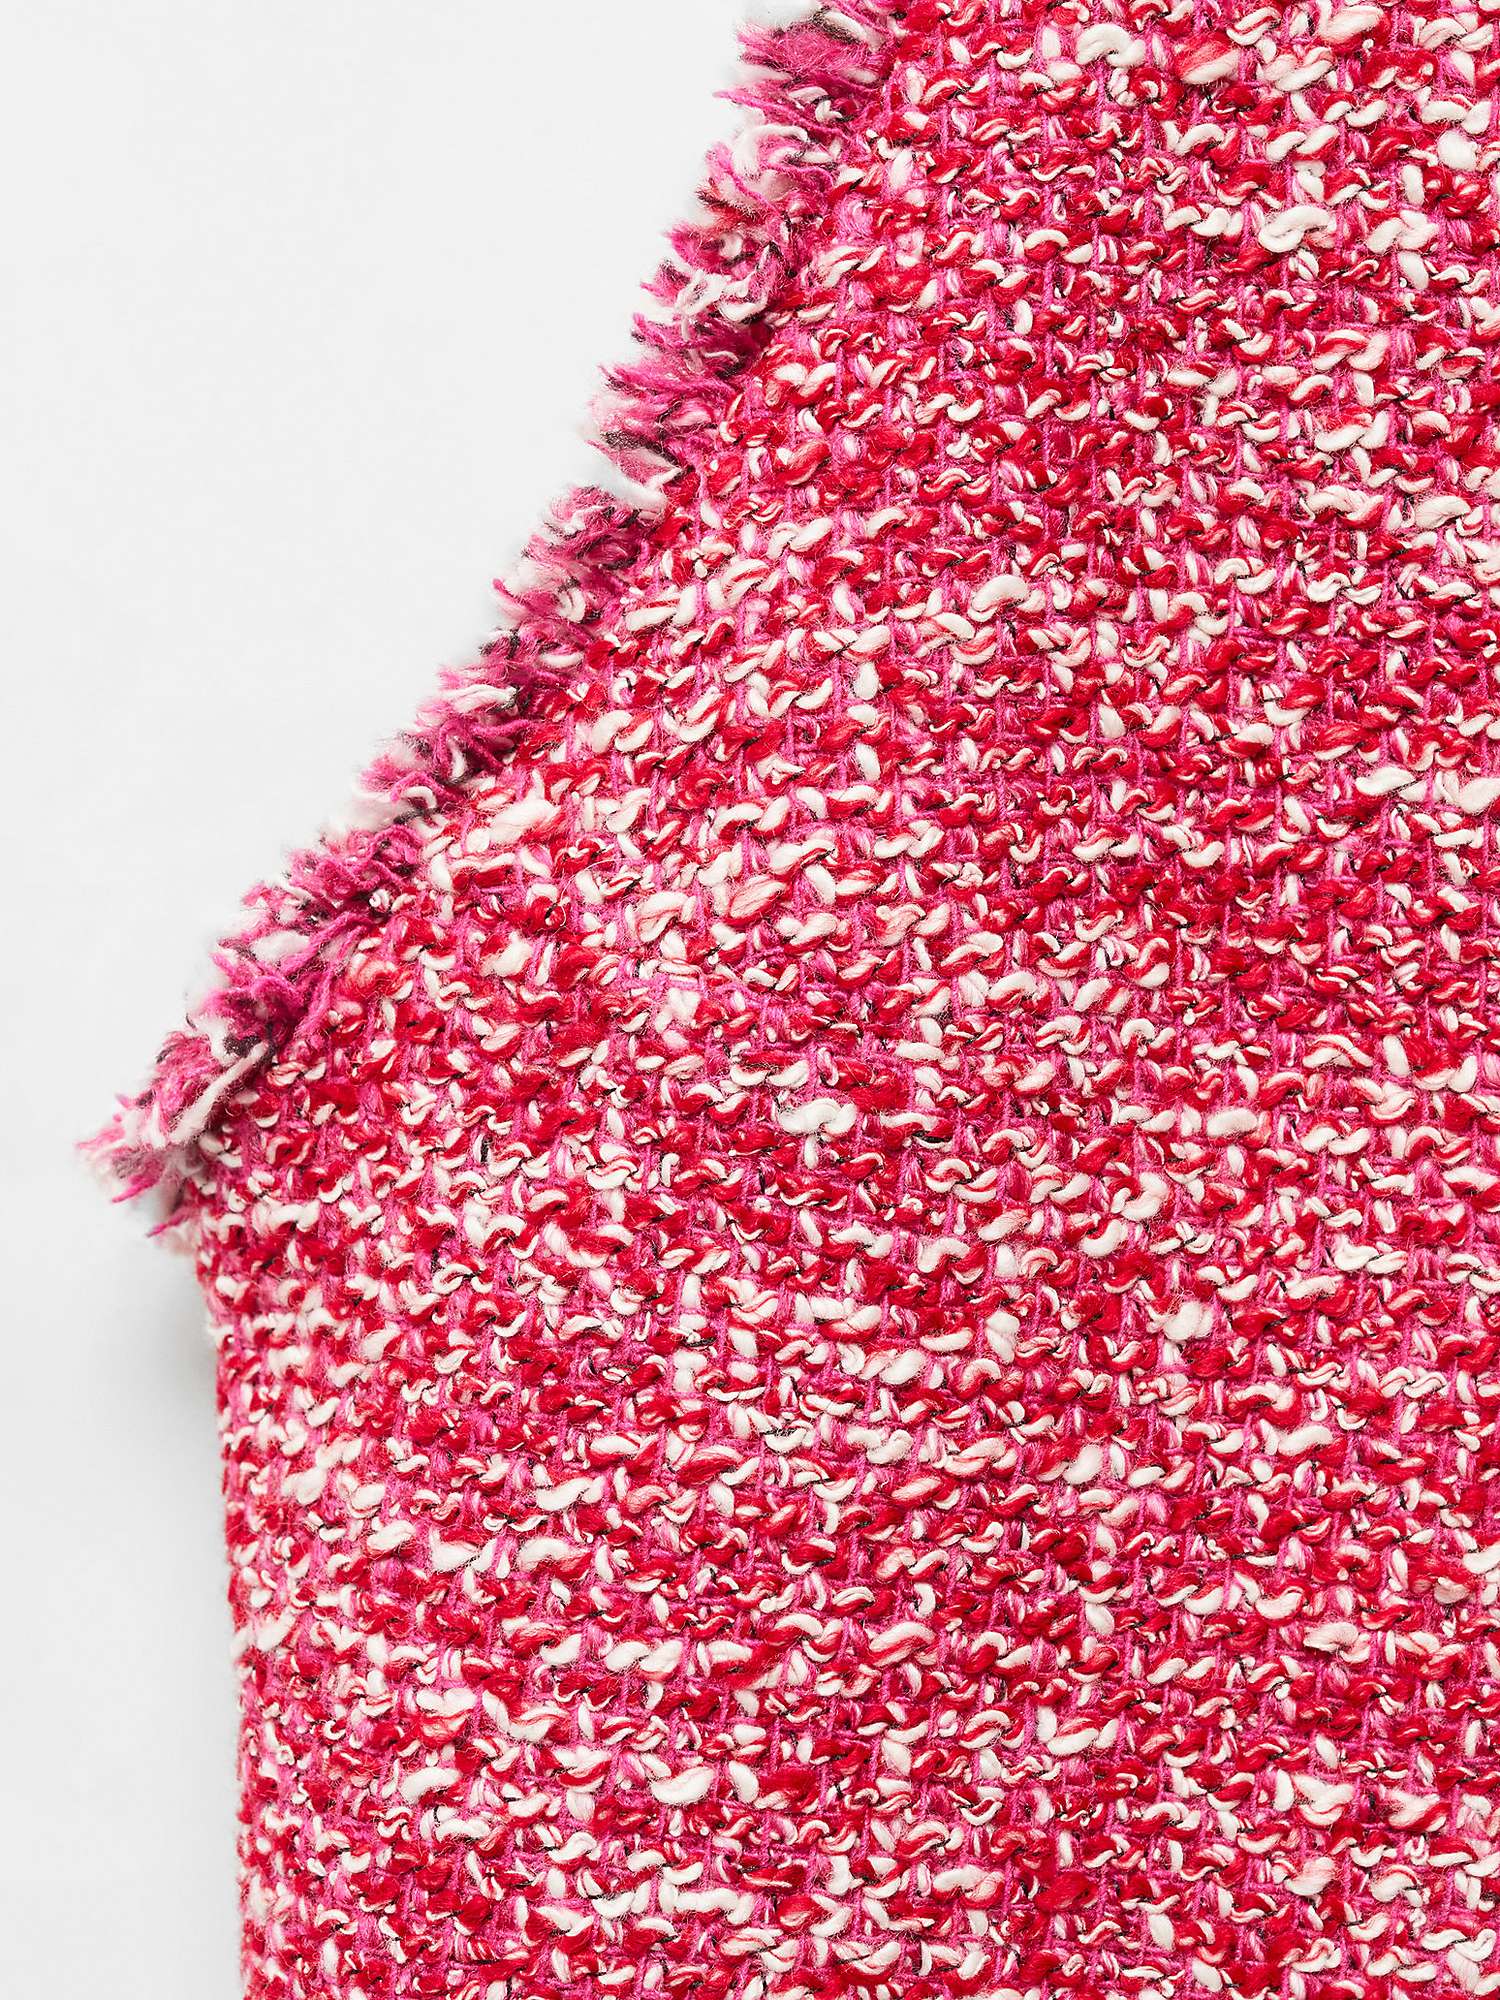 Buy Mango Siena Textured Mini Dress, Bright Pink Online at johnlewis.com